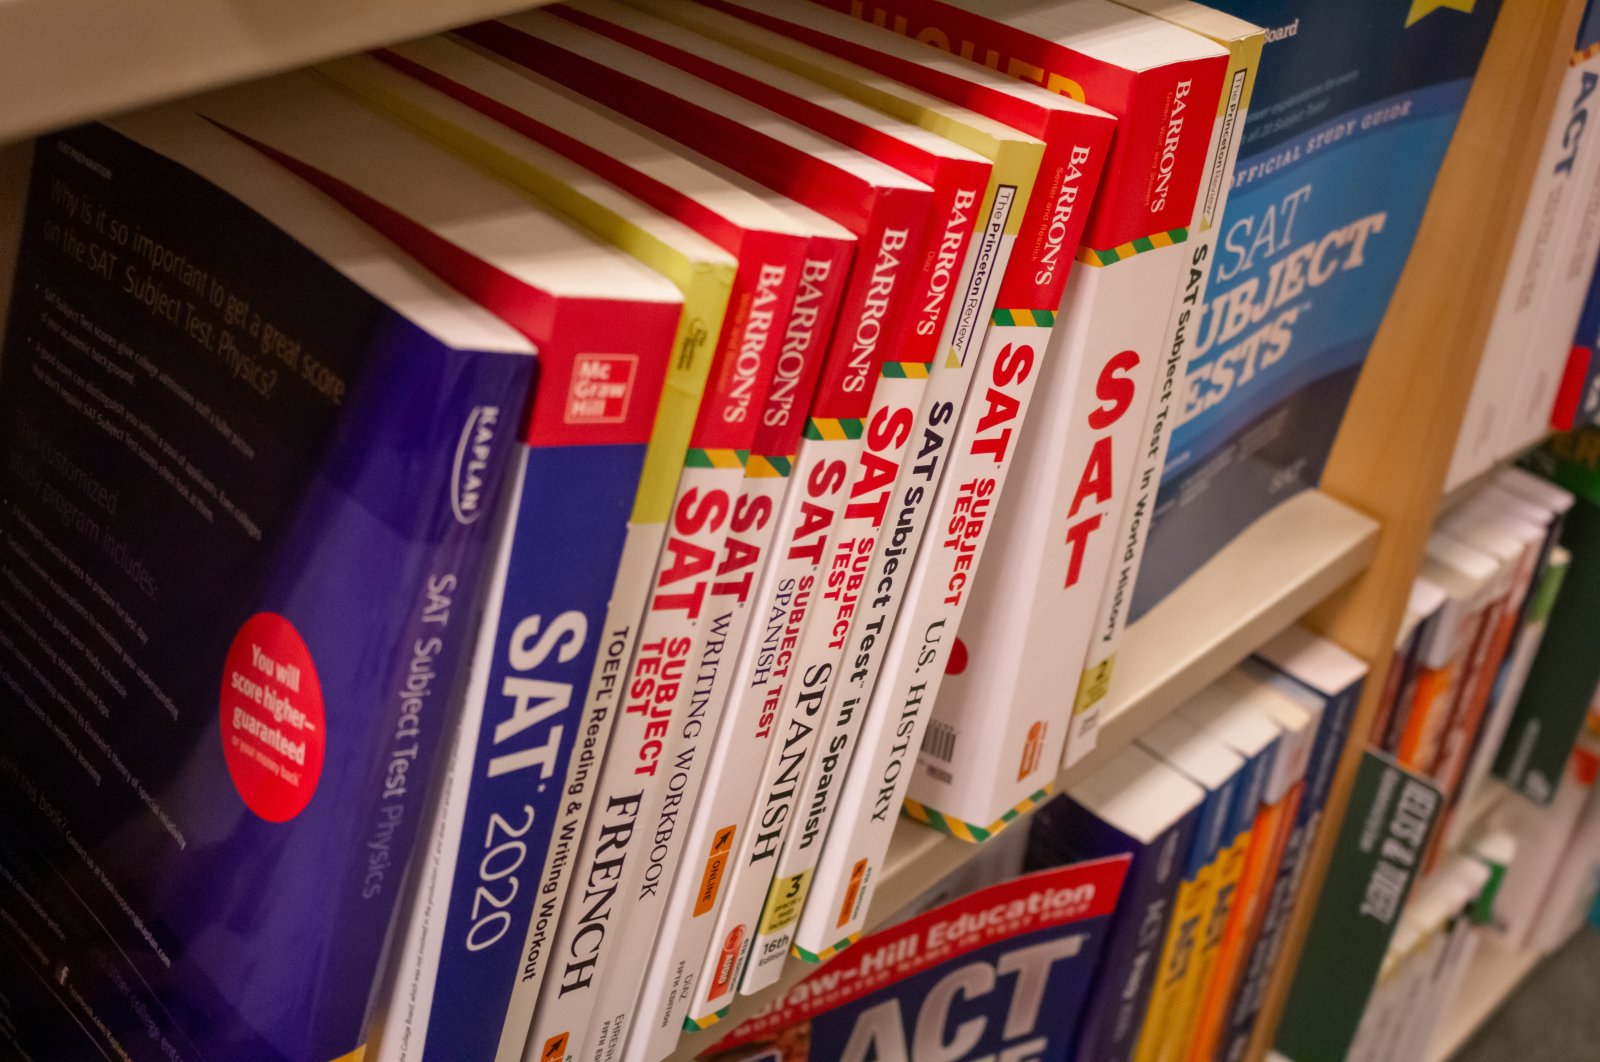 Several SAT prep books are seen on a shelf at a local bookstore in Laguna Niguel, California, U.S., Sept. 19, 2019. (Shutterstock Photo)